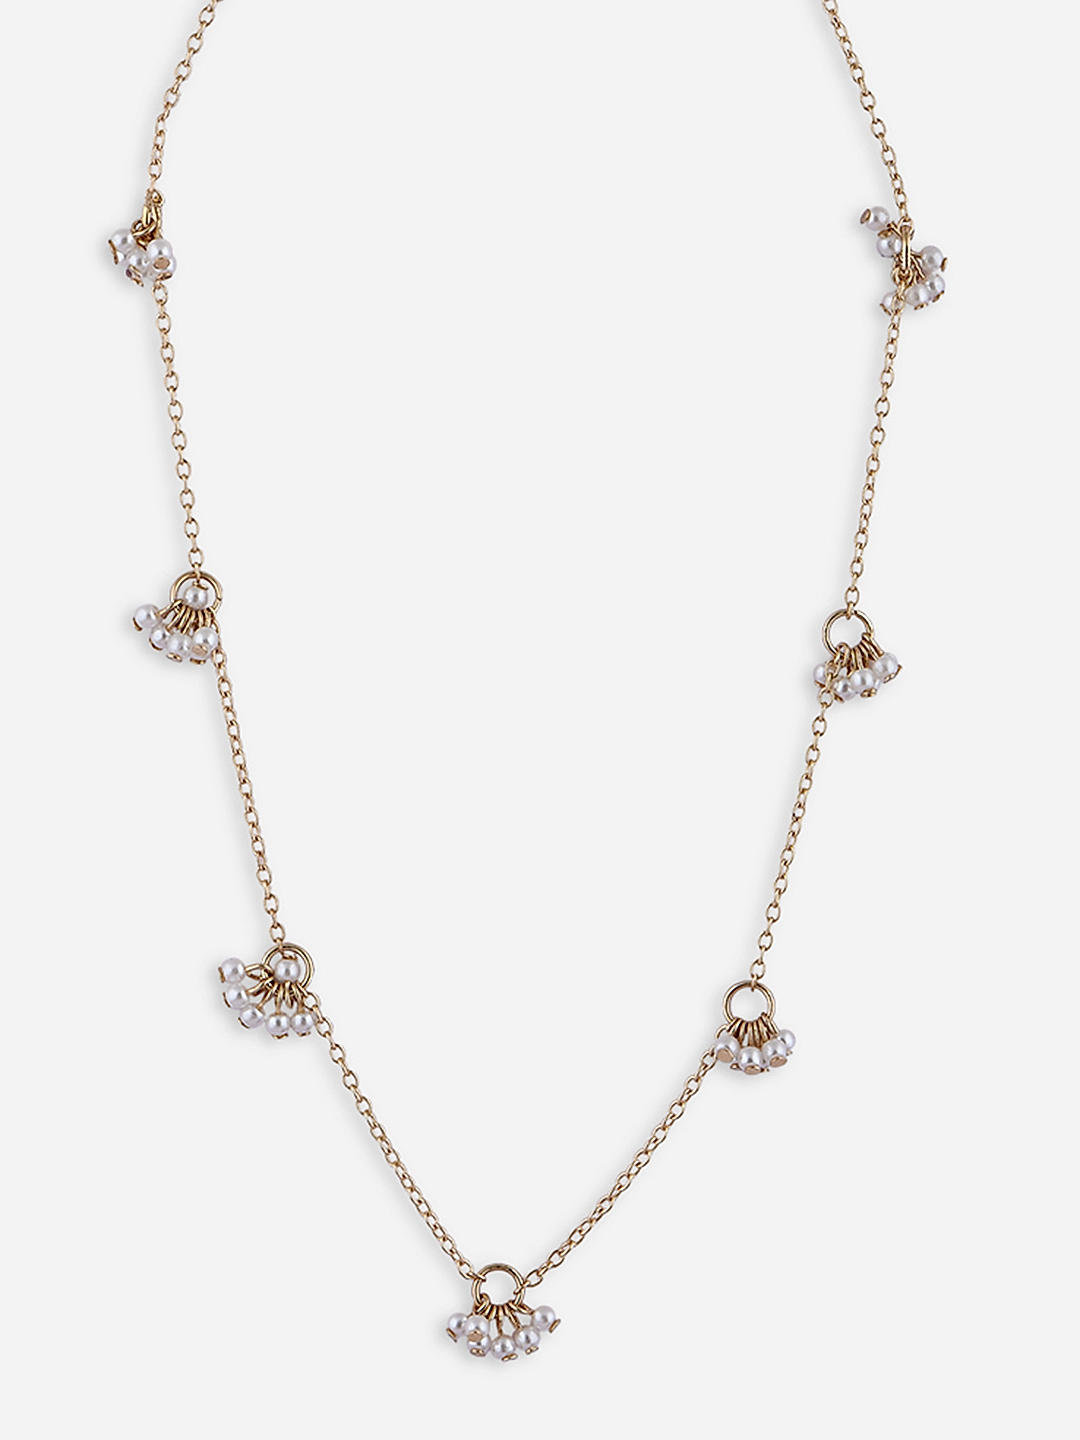 Amazon.com: Jewelry INC Solid 14K White Gold Box Chain Necklace, 16